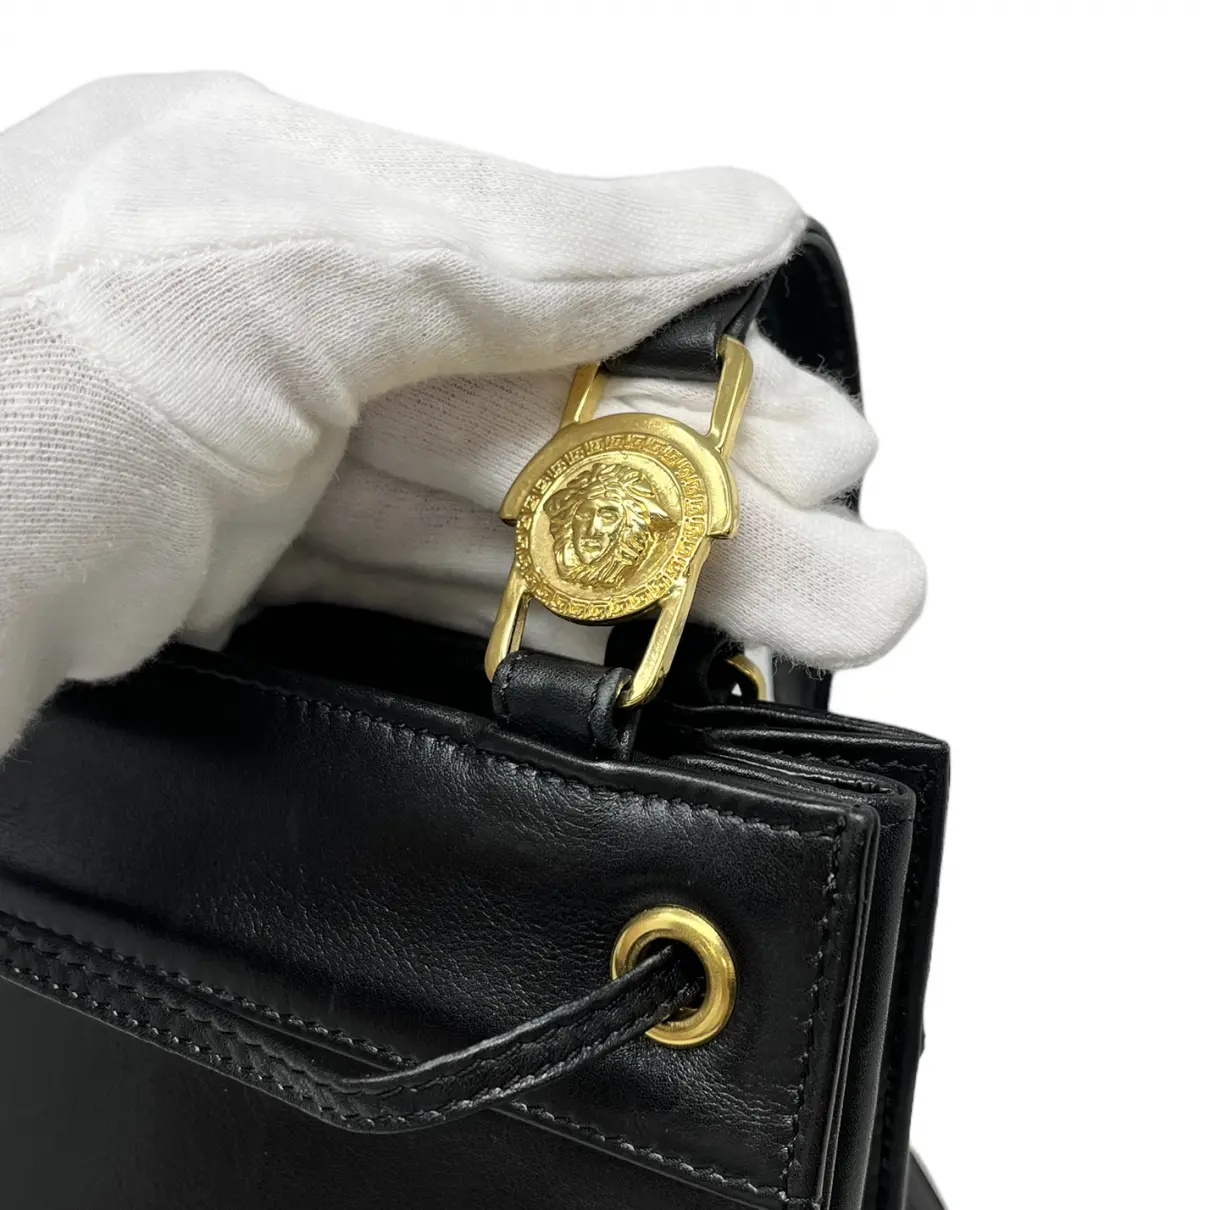 Buy Gianni Versace Leather handbag online - Vintage